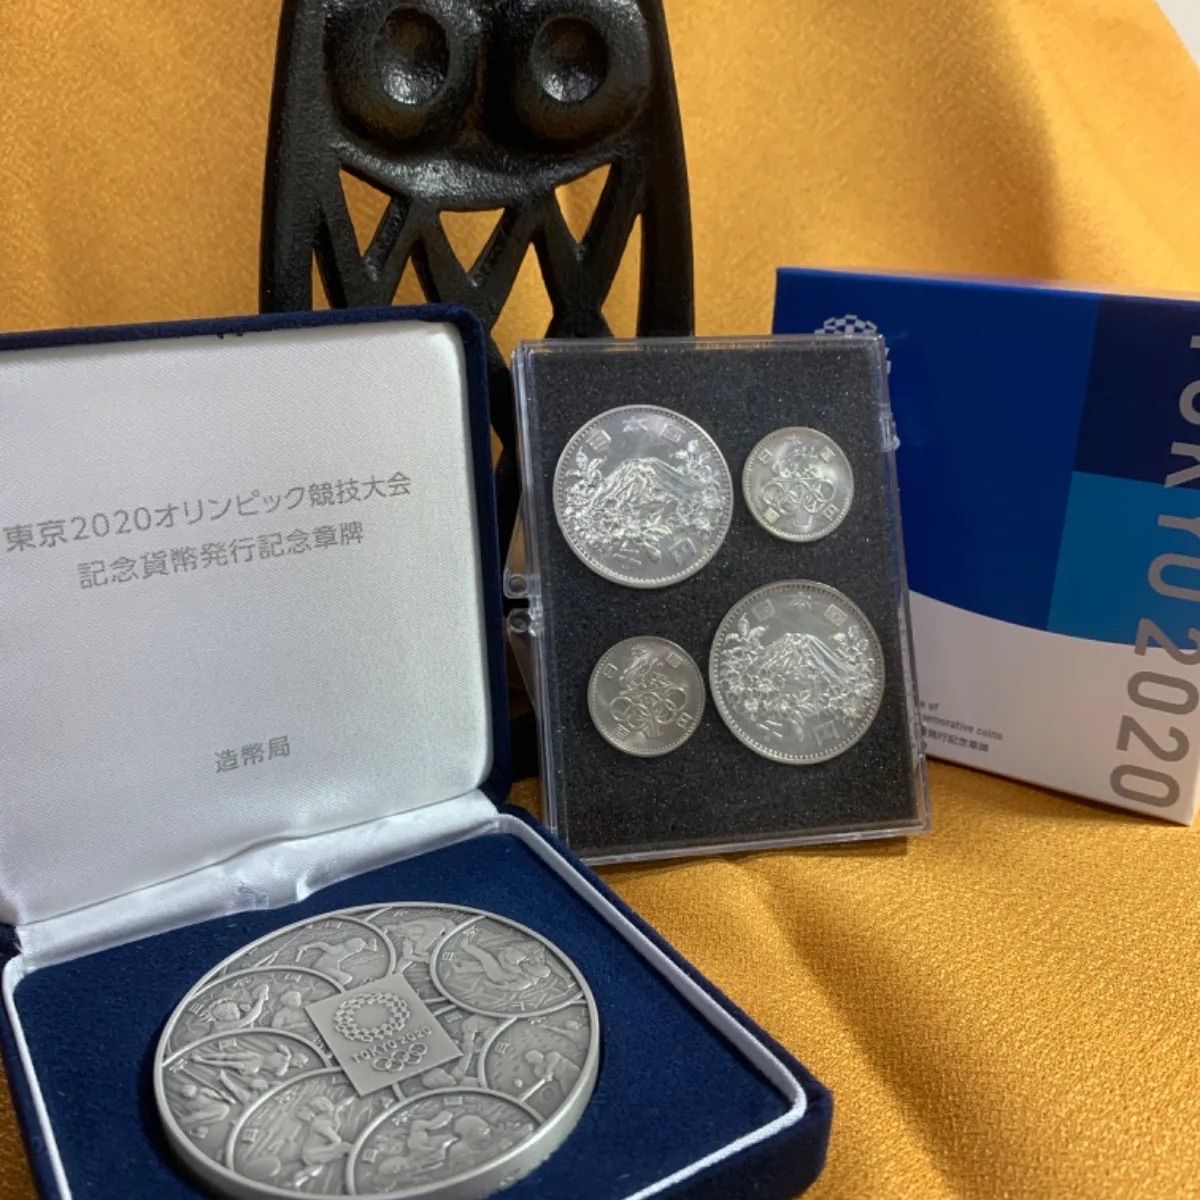 2020 東京 パラリンピック 競技大会 記念貨幣発行 記念章牌 - 金属工芸